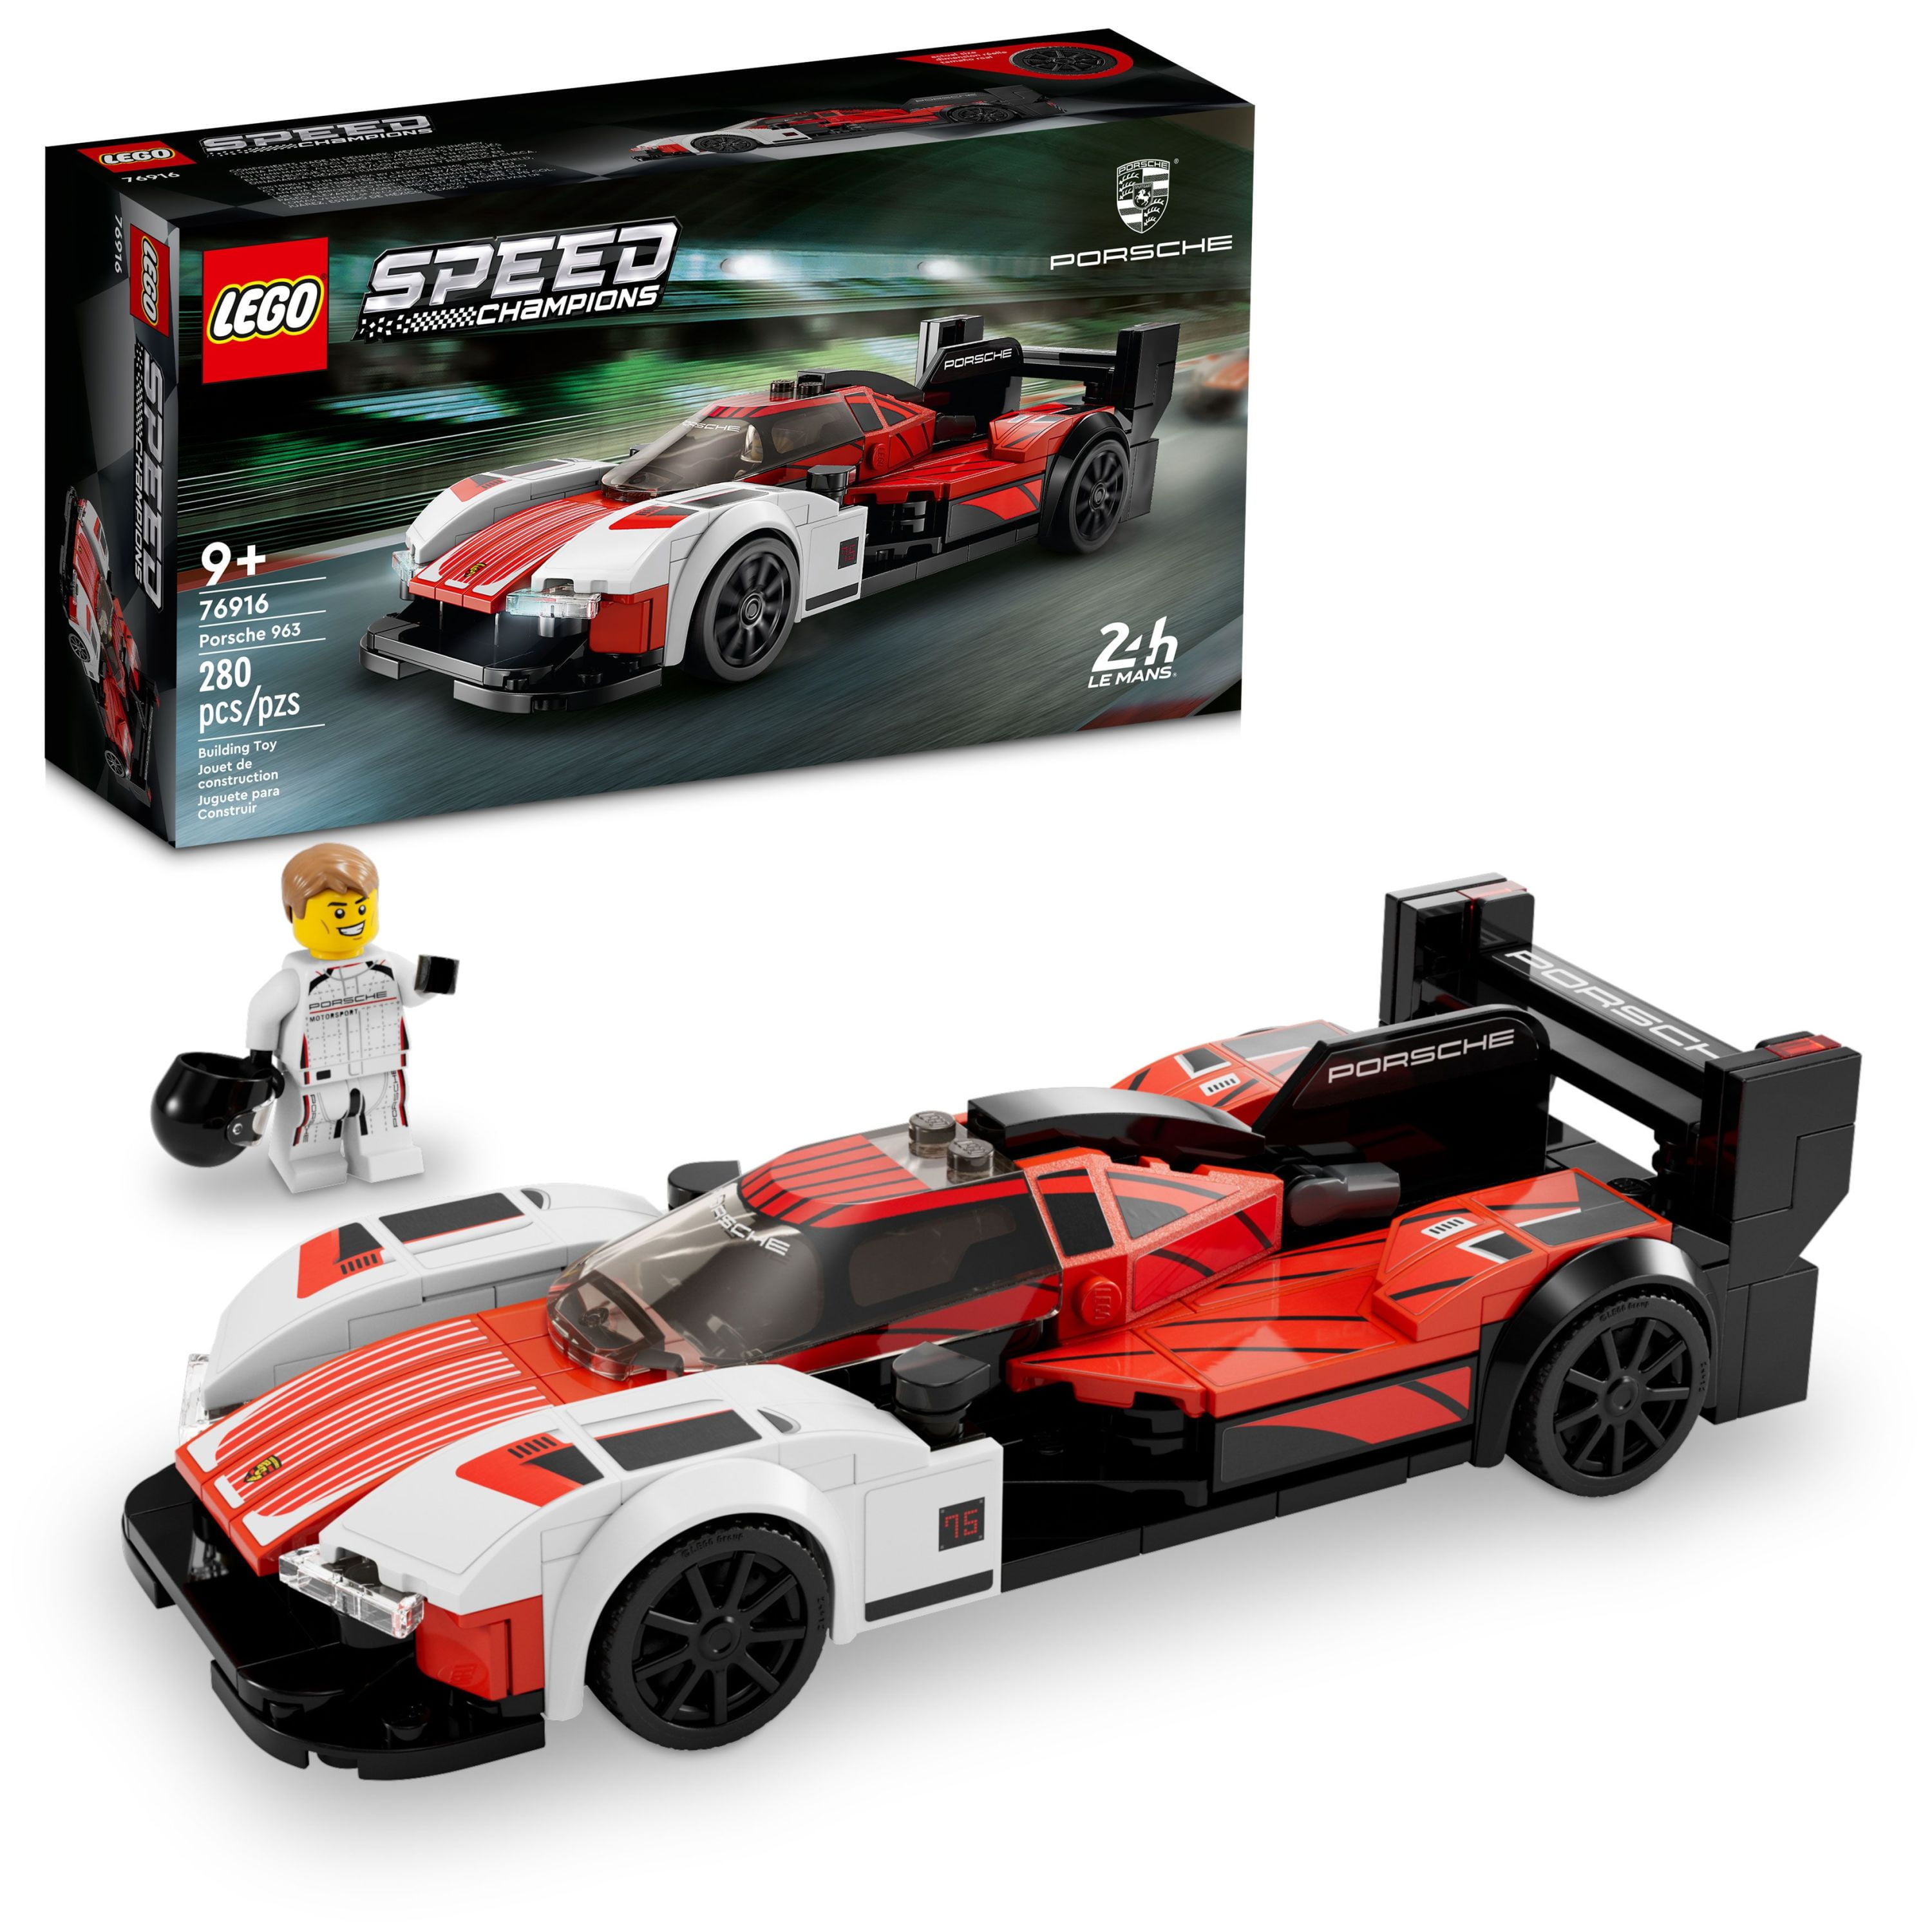 oosten onderwerp Televisie kijken LEGO Speed Champions Porsche 963 76916, Model Car Building Kit, Collectible  Race Car Toy with Driver Minifigure, Makes a Great Gift for Teens -  Walmart.com